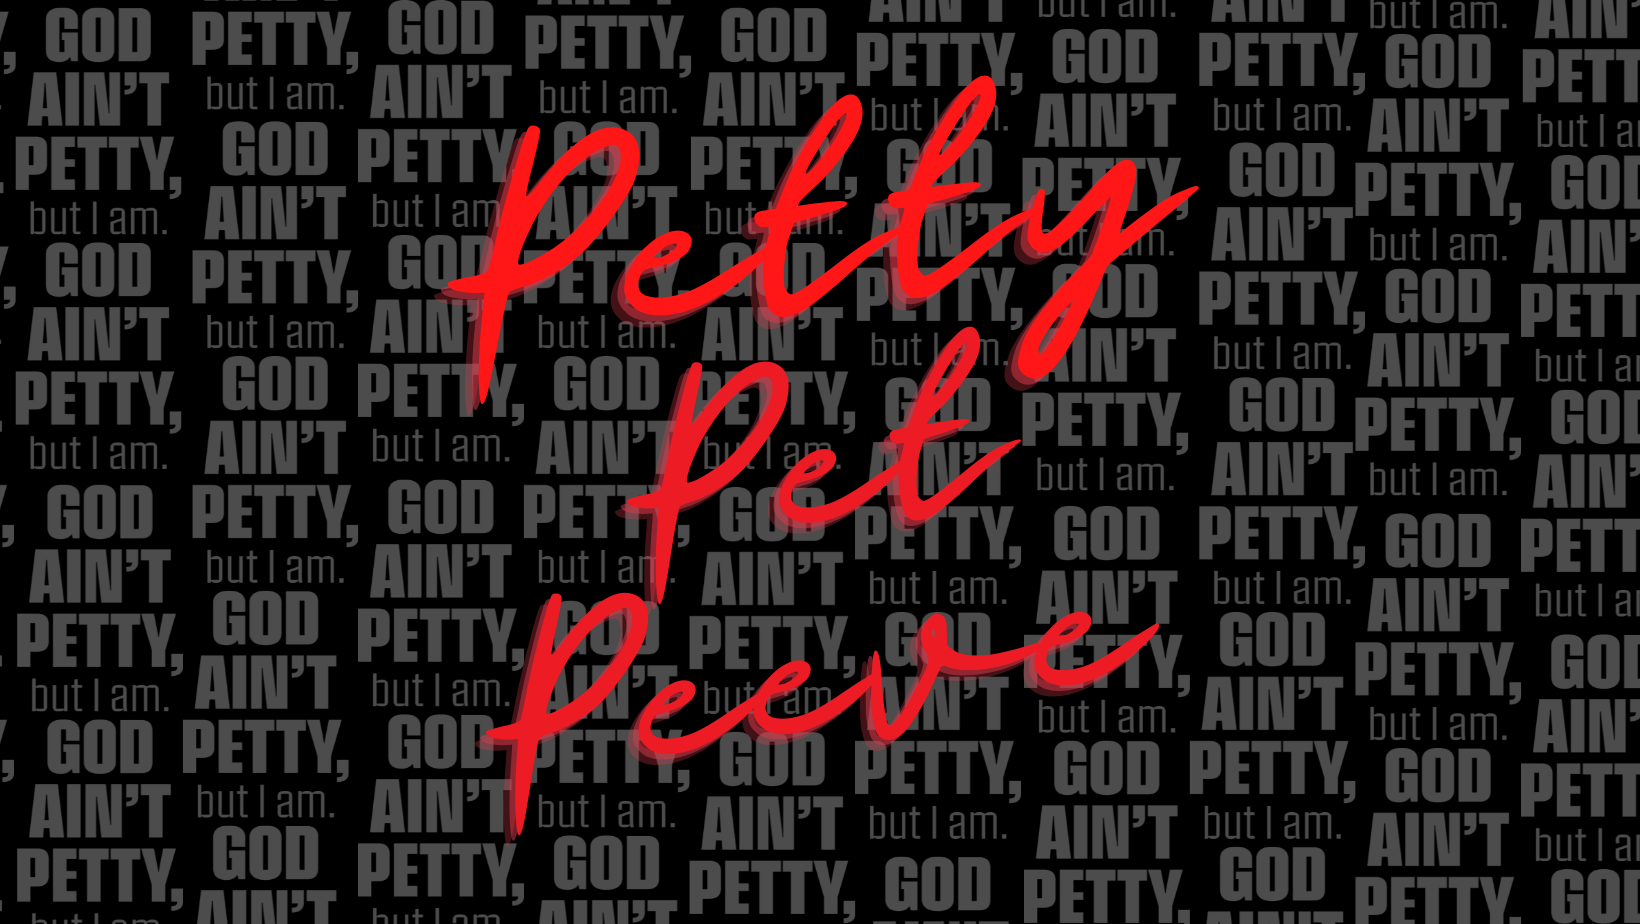 Petty Pet Peeve-God Ain't Petty But I Am